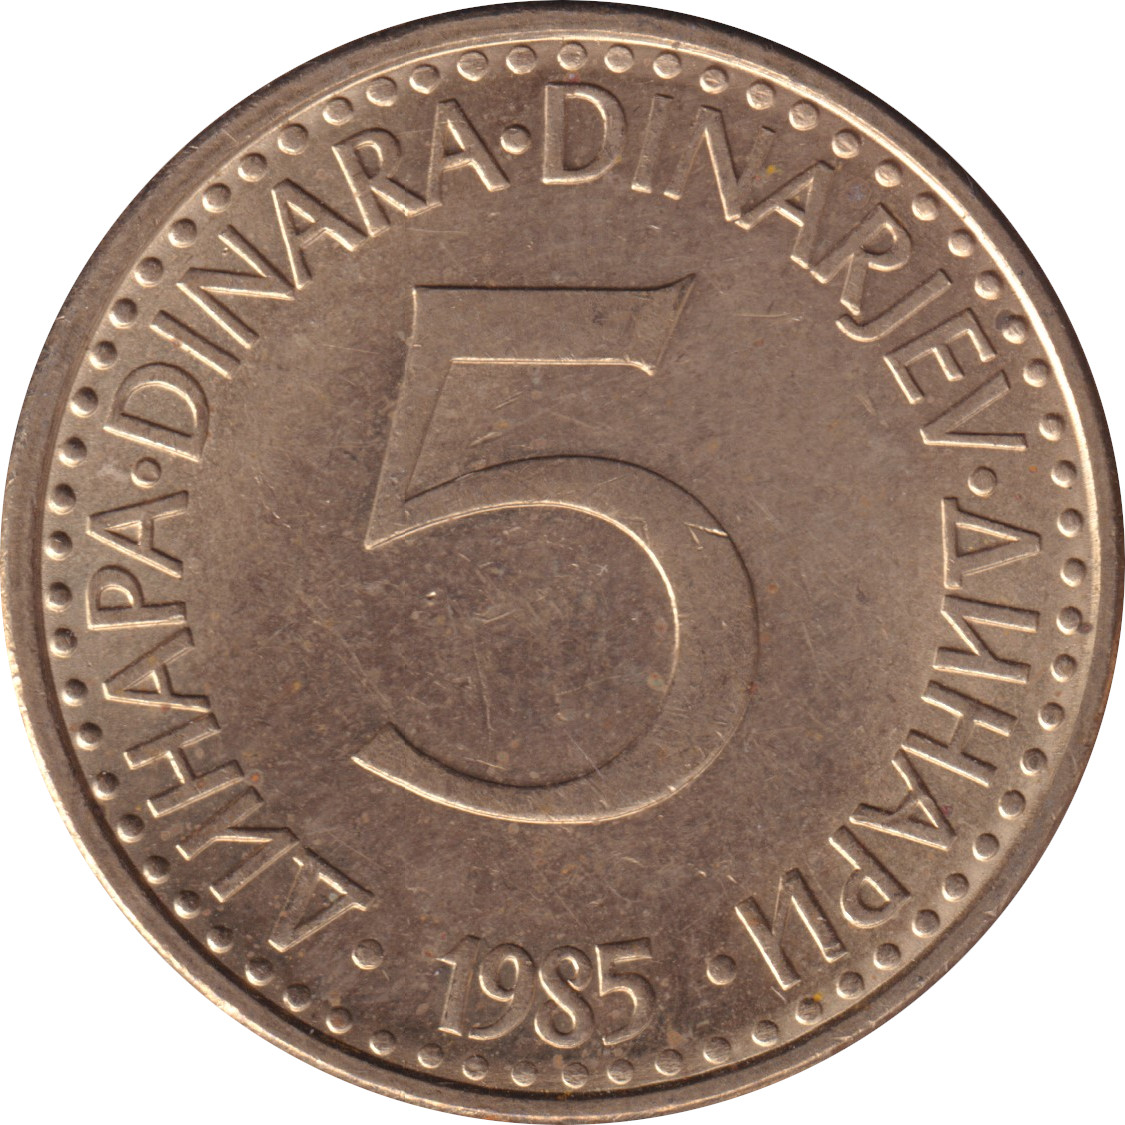 5 dinara - Emblem - 1982 issue